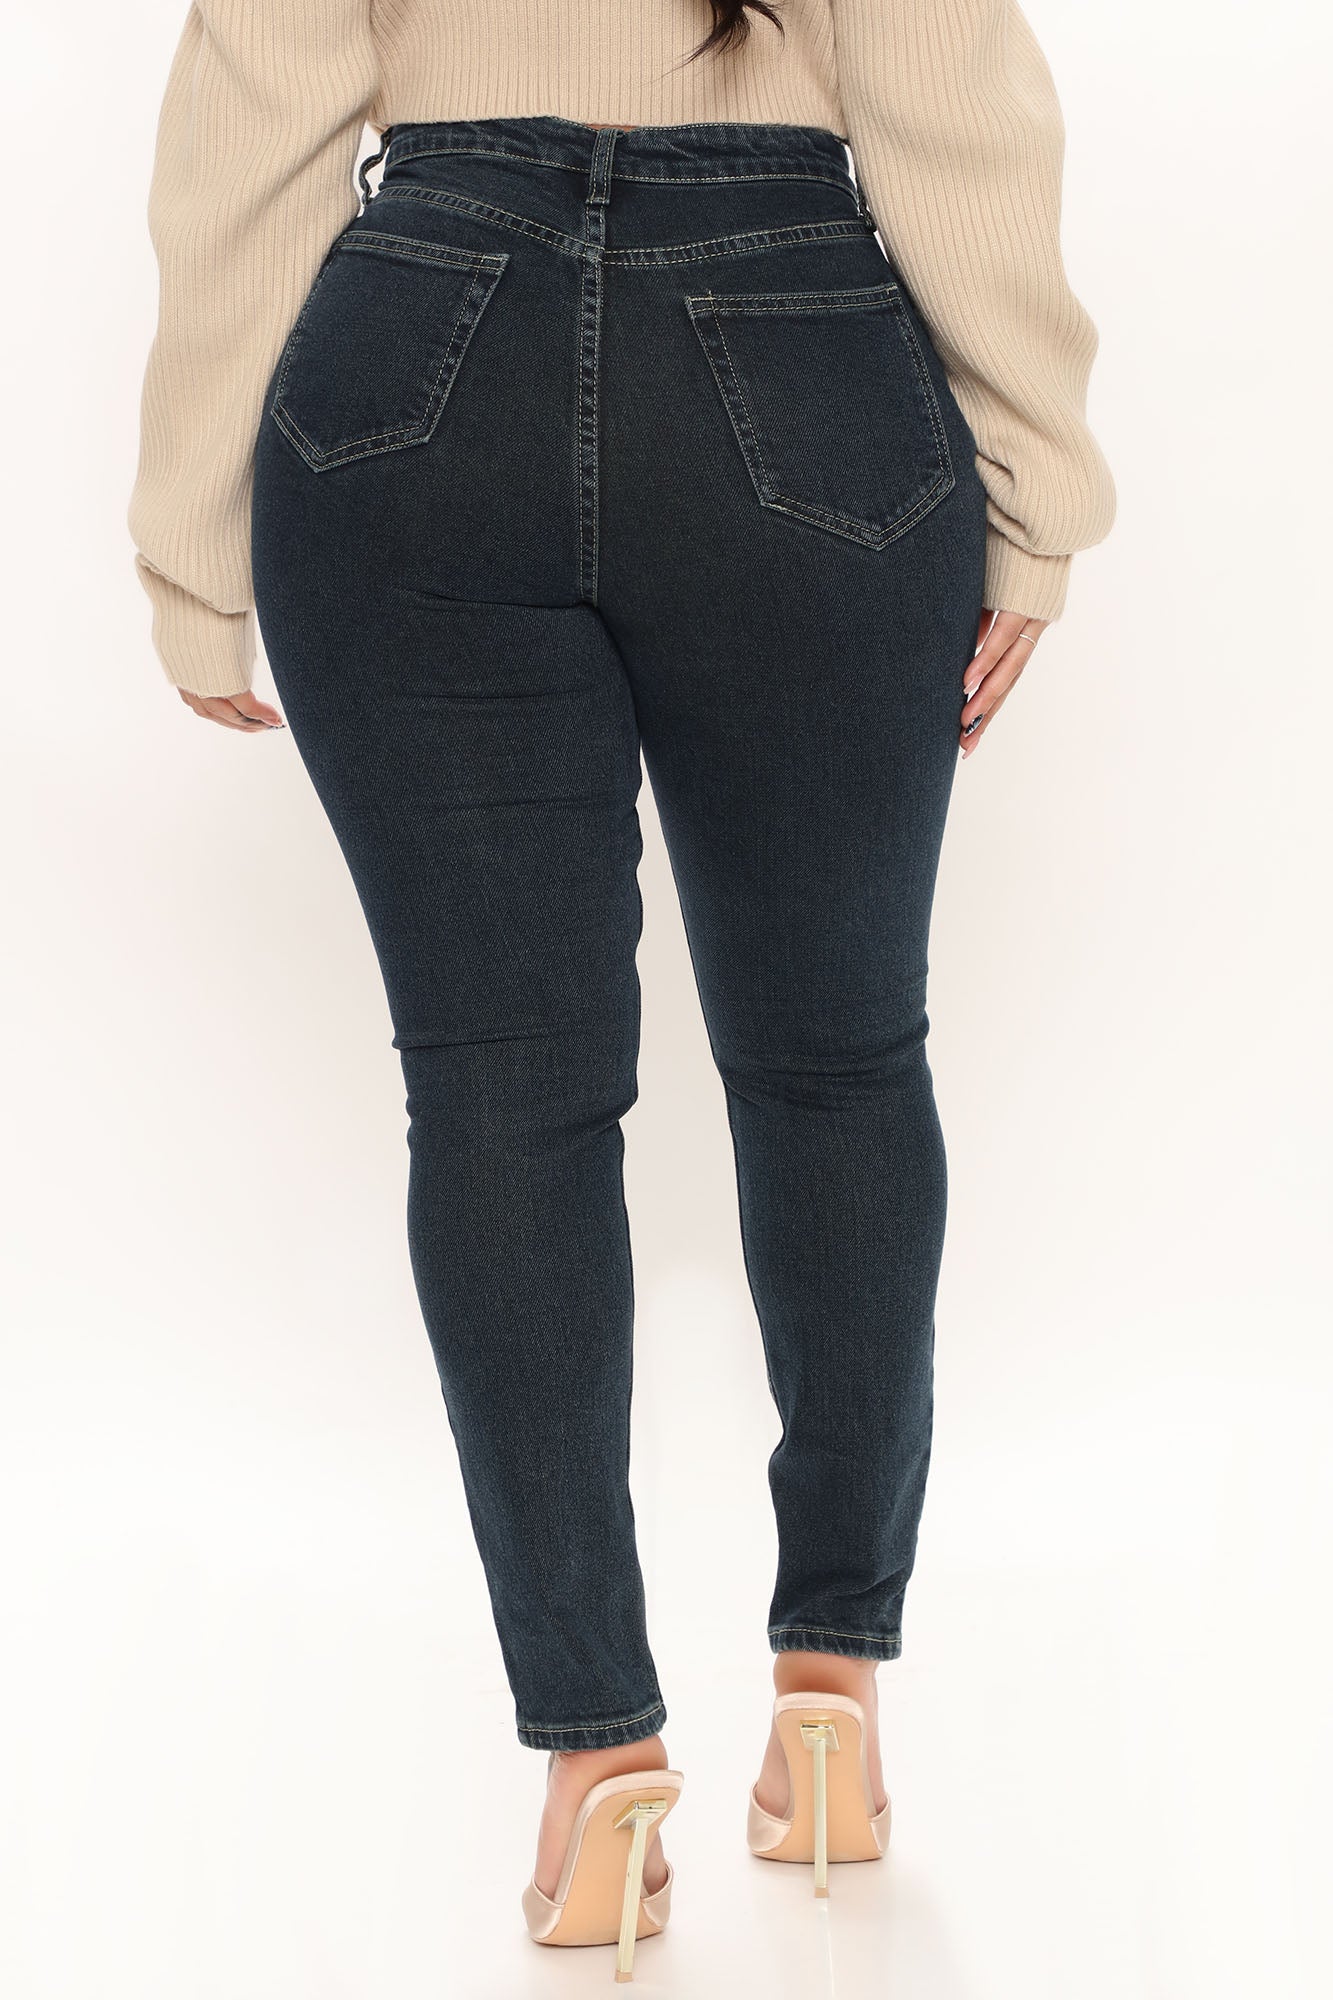 Sienna Seam Front Ankle Slit Skinny Jeans - Dark Wash